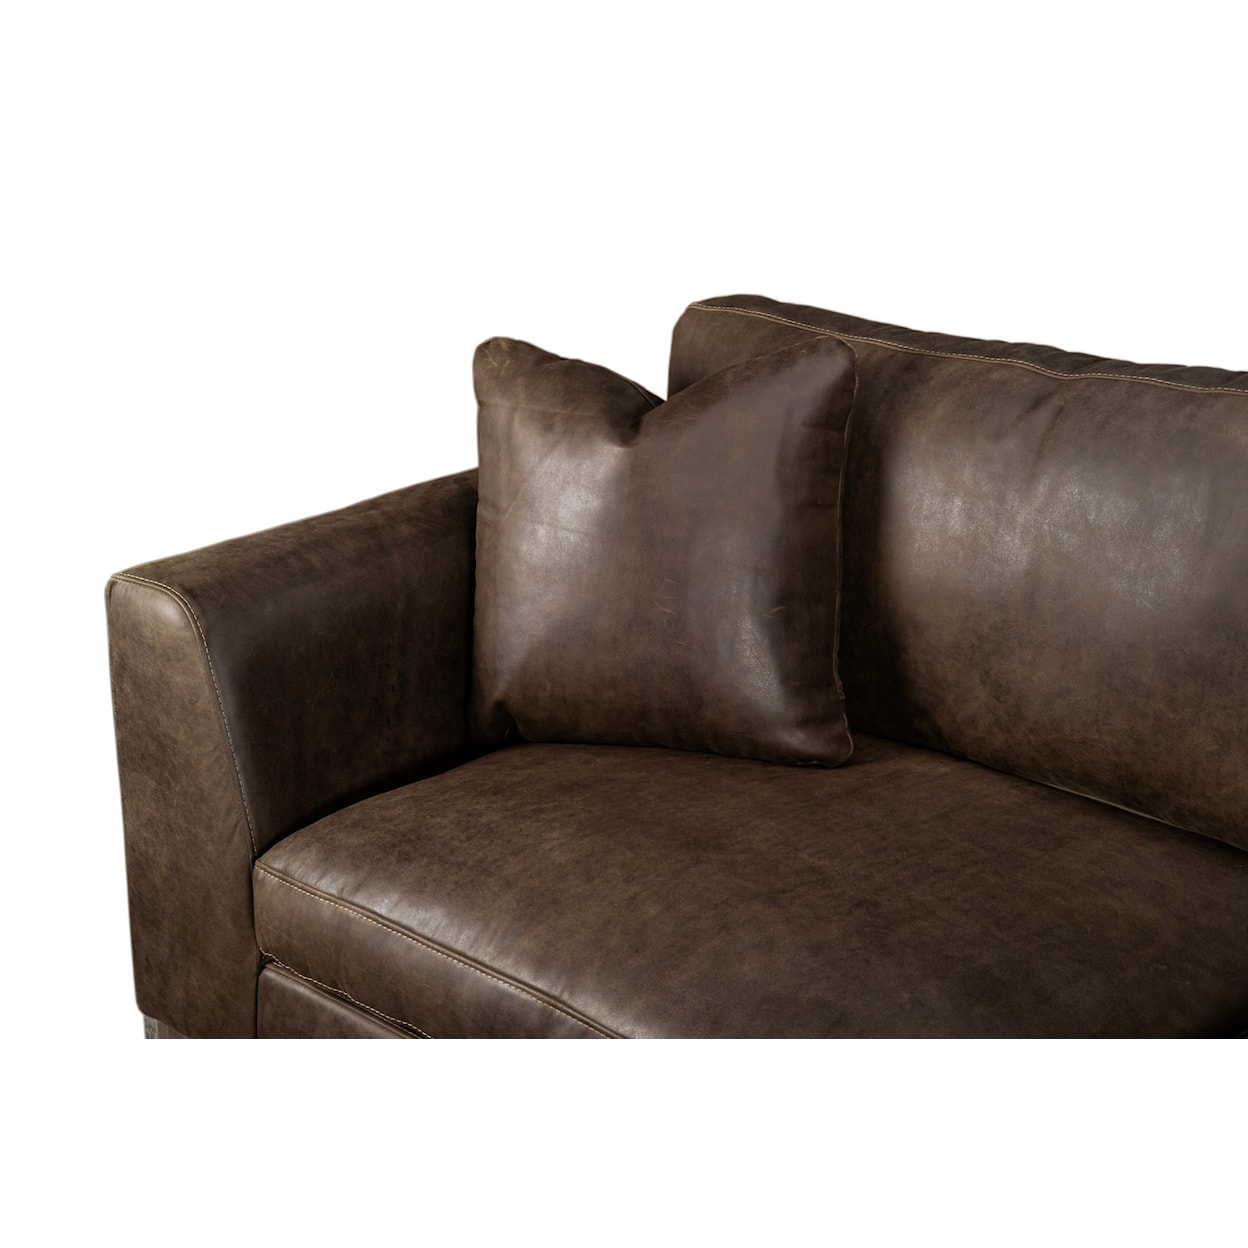 GTR Leather Osmund Osmund Top Grain Leather Sofa